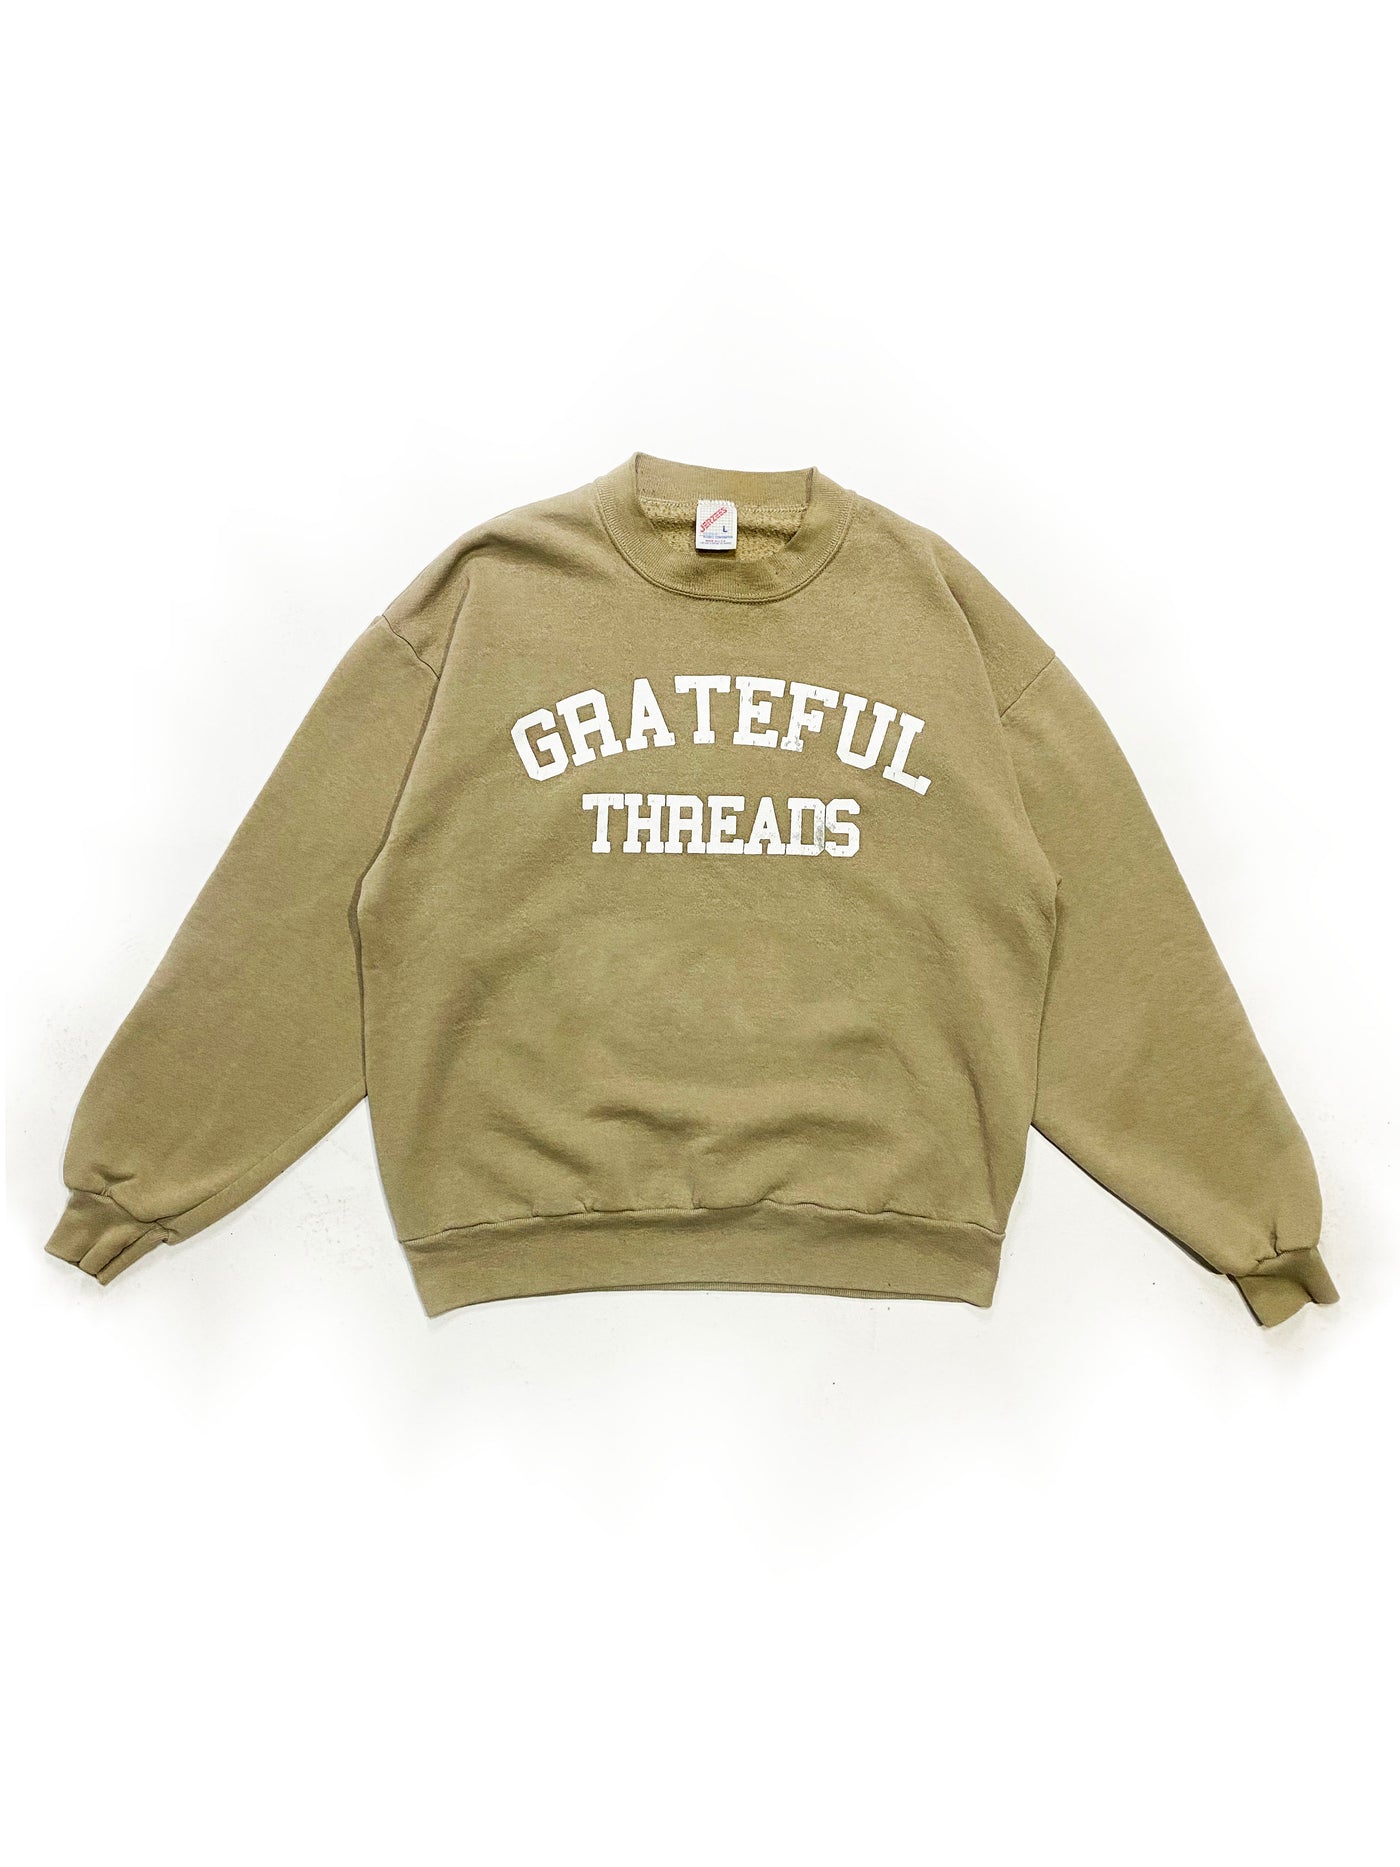 90s Jerzees Grateful Threads Spellout Crewneck - Brown - Size L/M